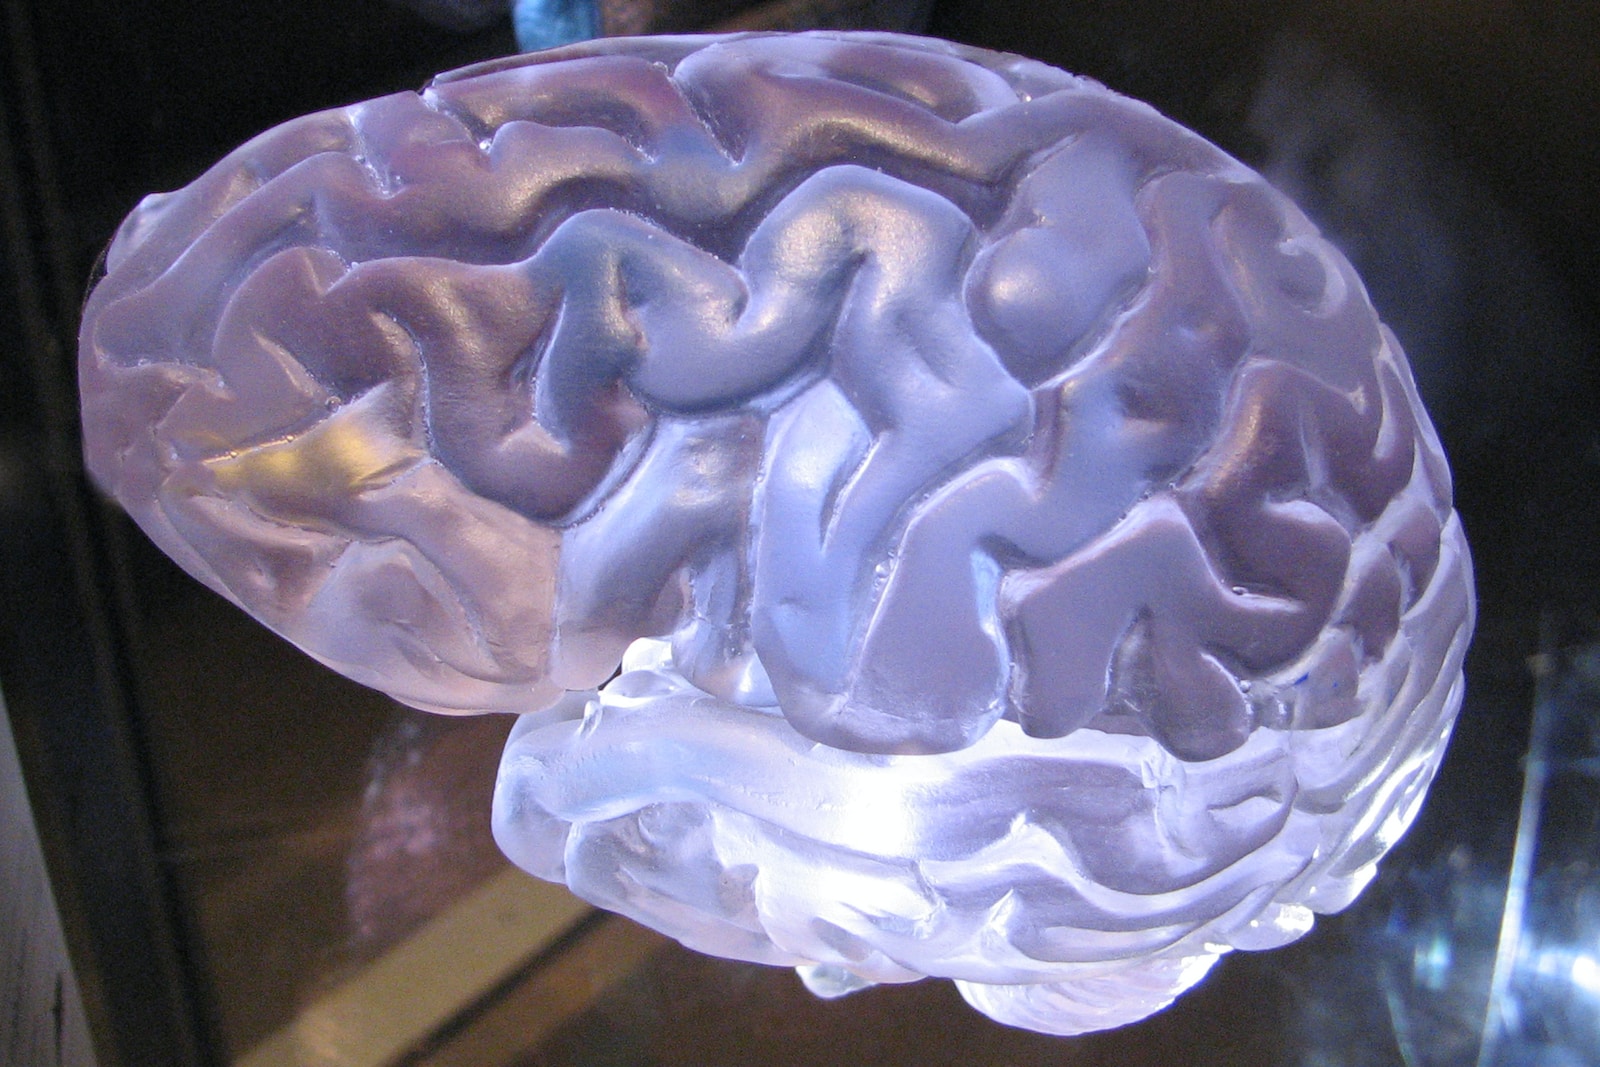 a close up of a plastic brain model